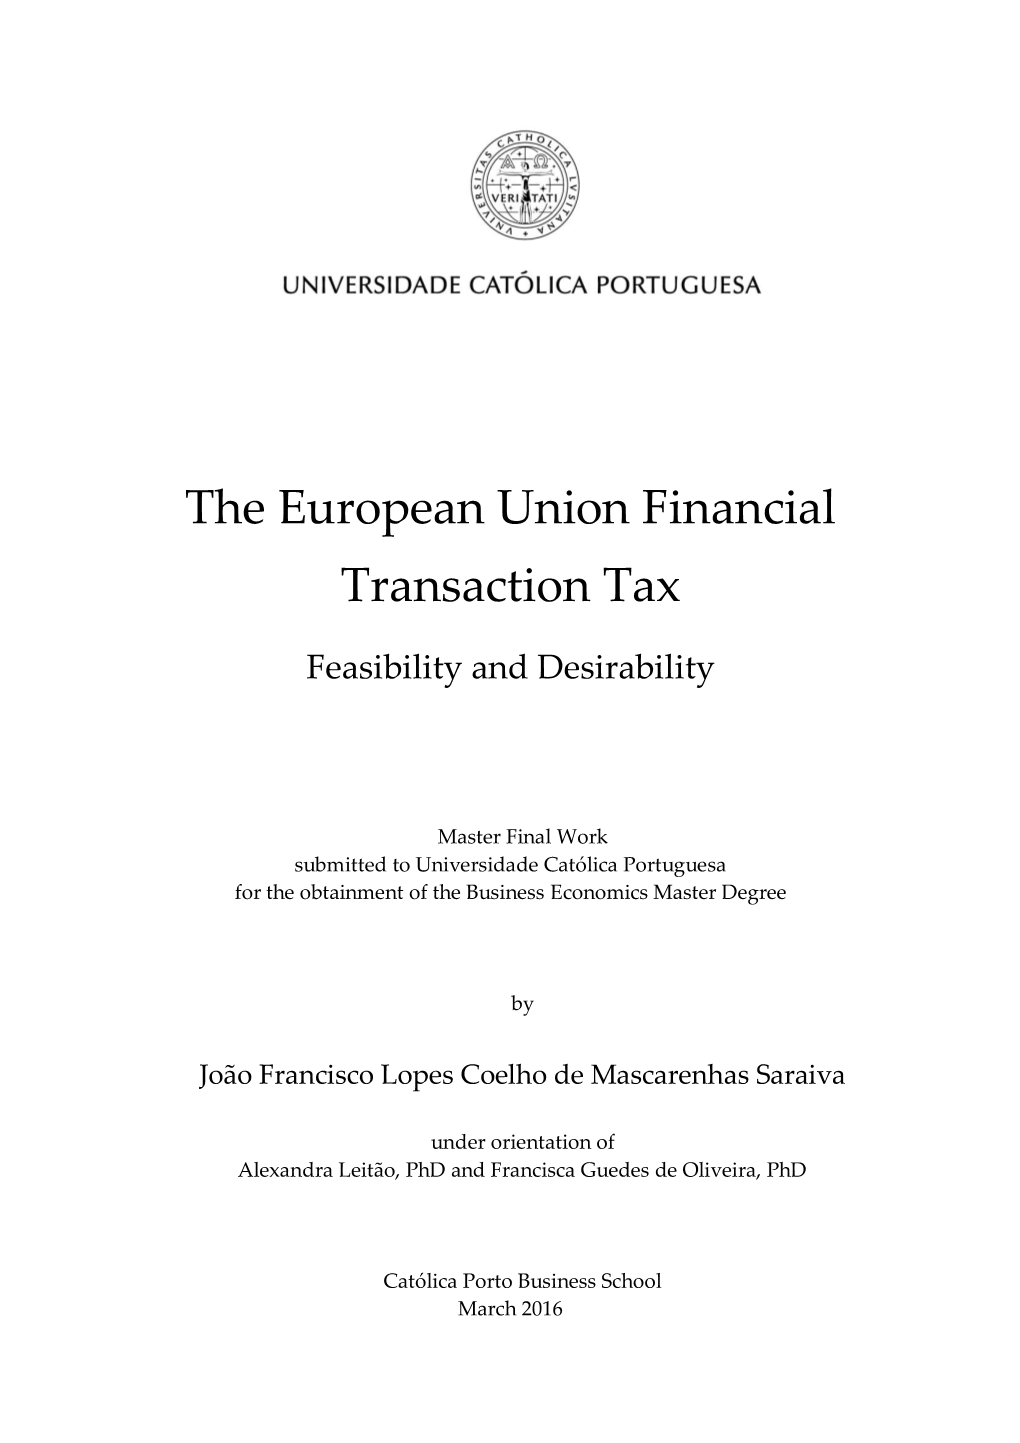 The European Union Financial Transaction Tax